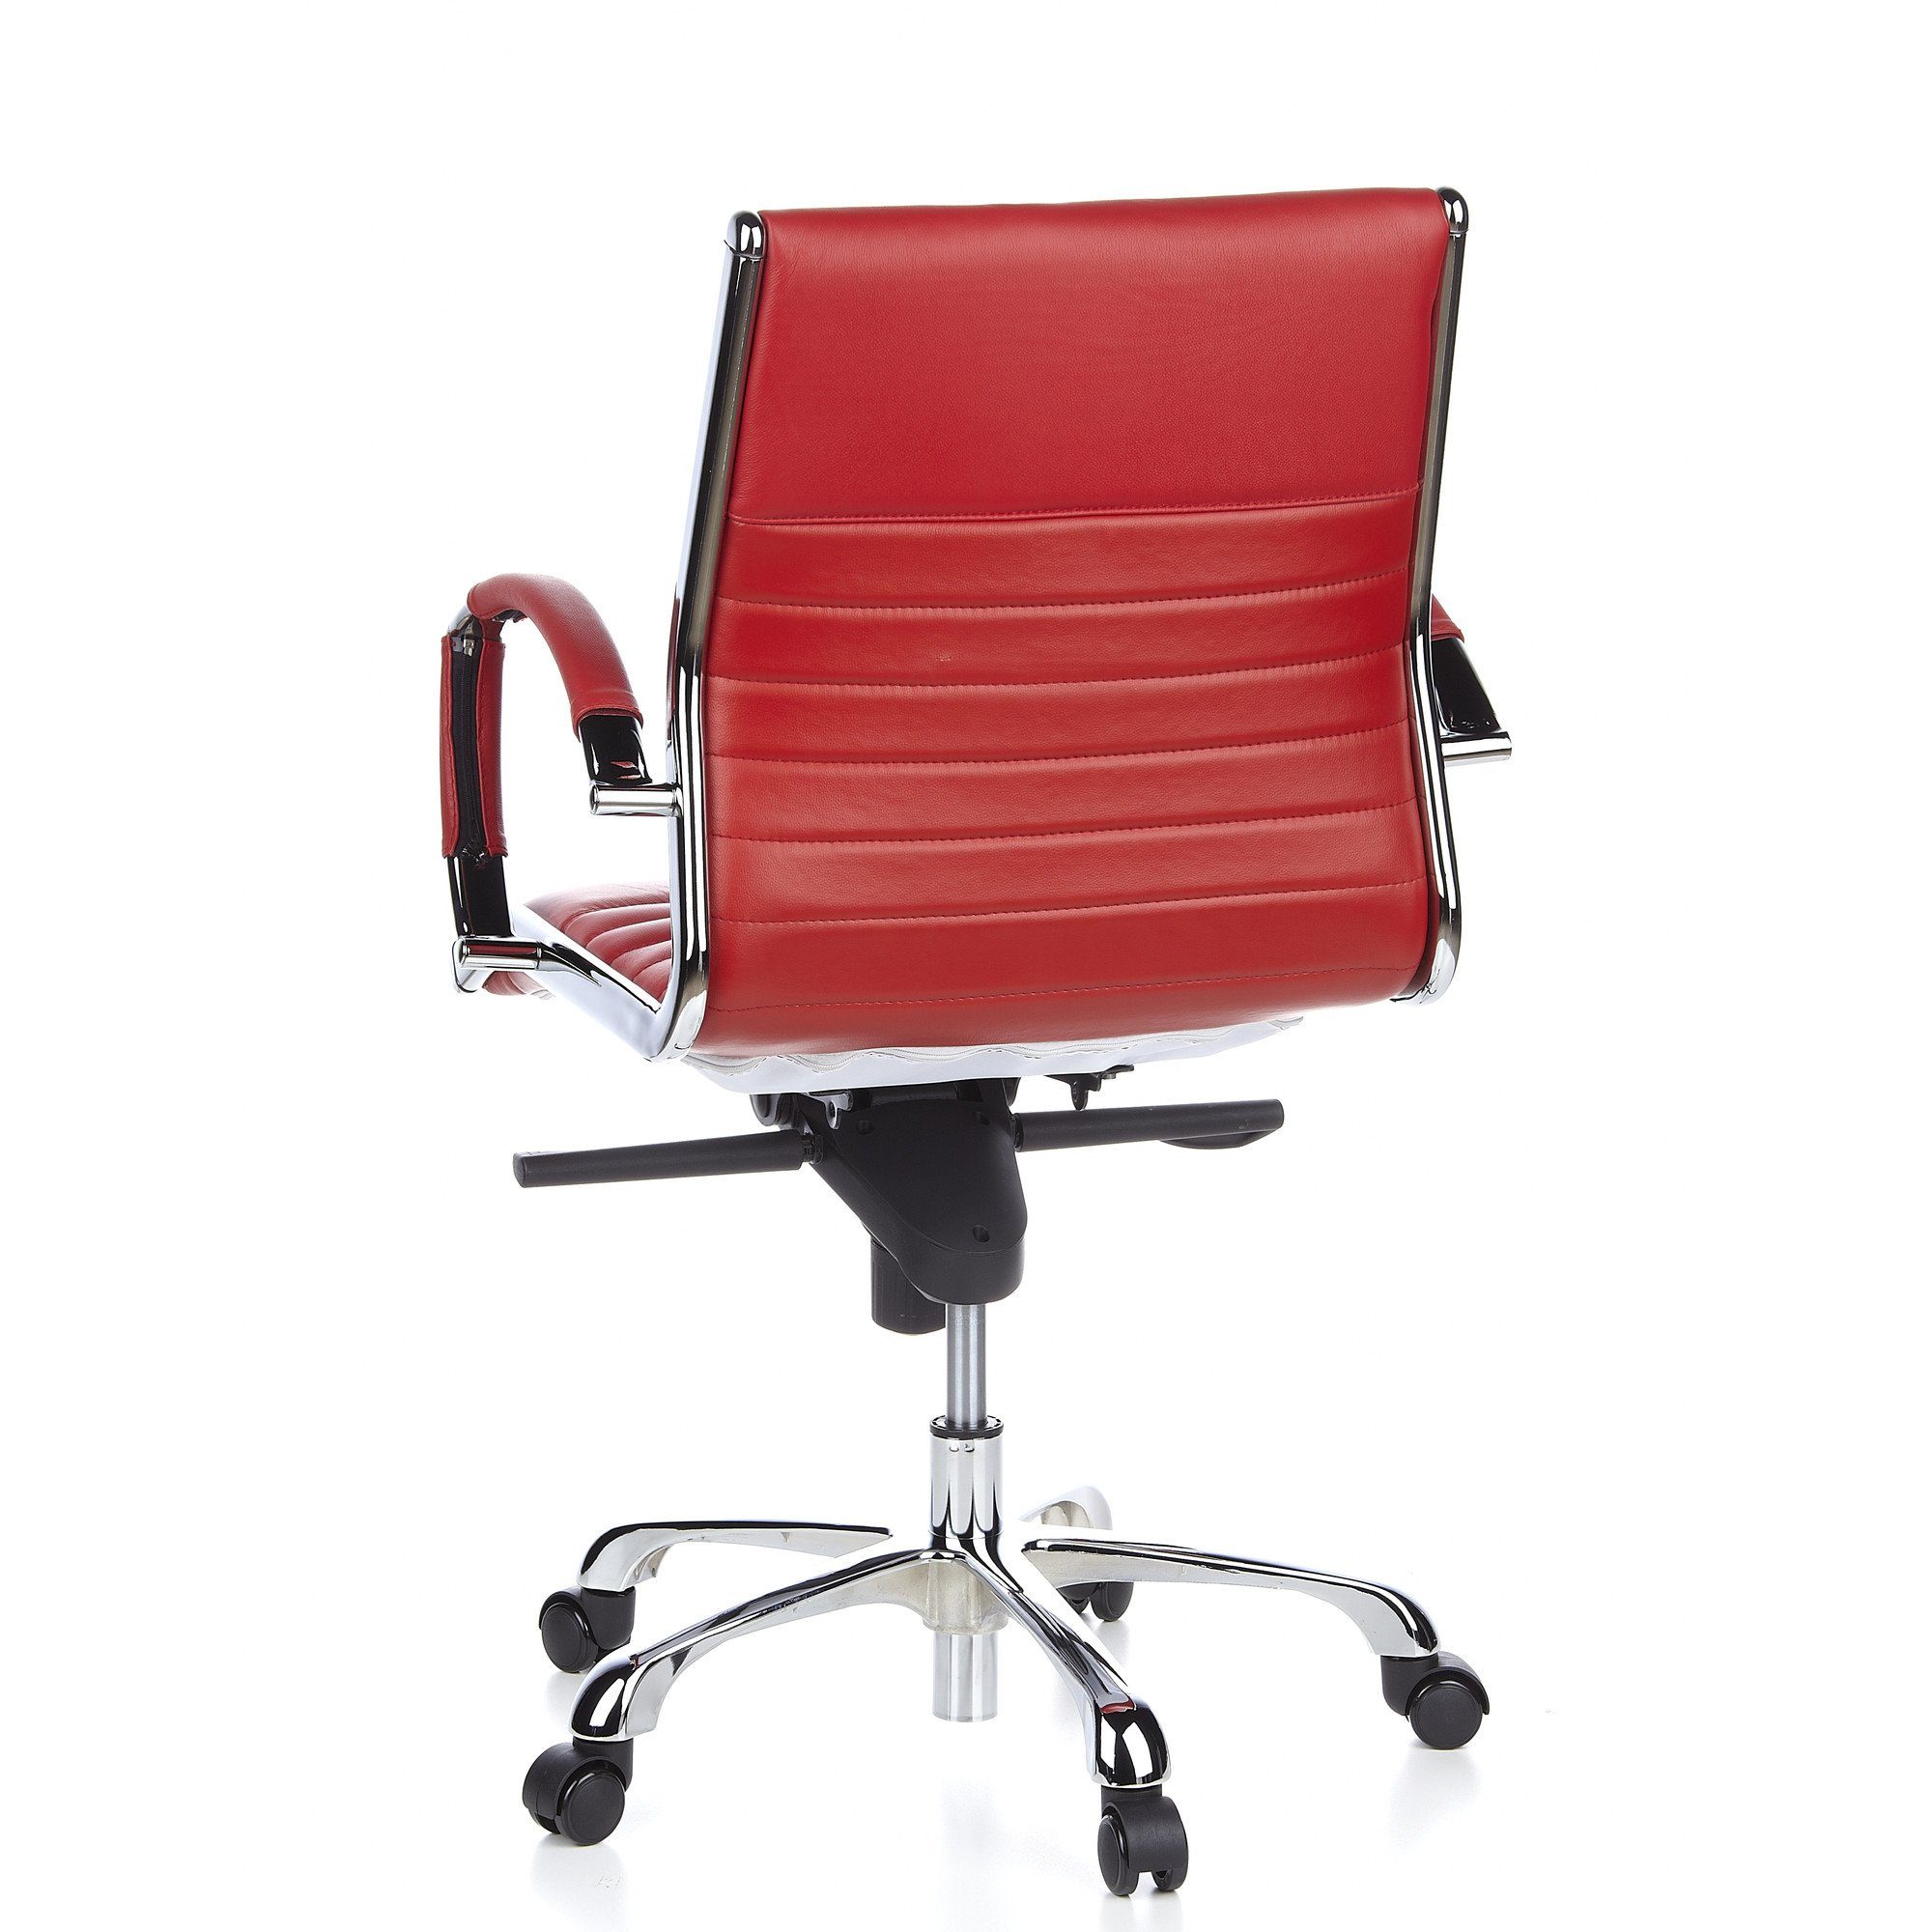 hjh OFFICE Rot Drehstuhl ergonomisch PARMA Chefsessel Armlehnen, Profi Leder mit Bürostuhl Chefsessel 10